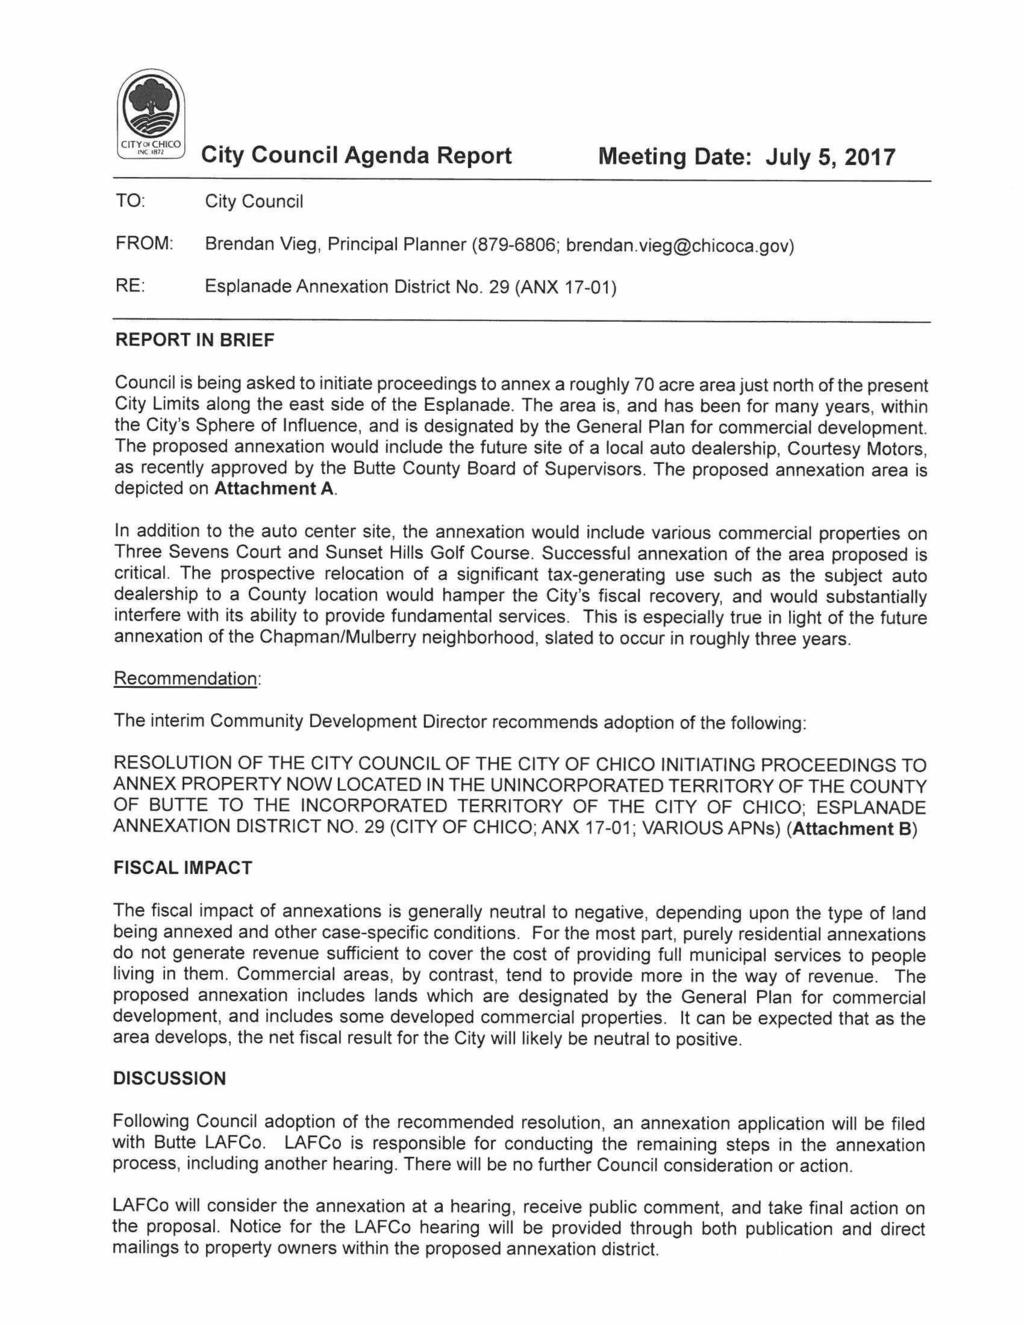 * CITy,HICO City Council Agenda Report Meeting Date: July 5, 2017 TO: City Council FROM: Brendan Vieg, Principal Planner (879-6806; brendan.vieg@chicoca.gov) RE Esplanade Annexation District No.